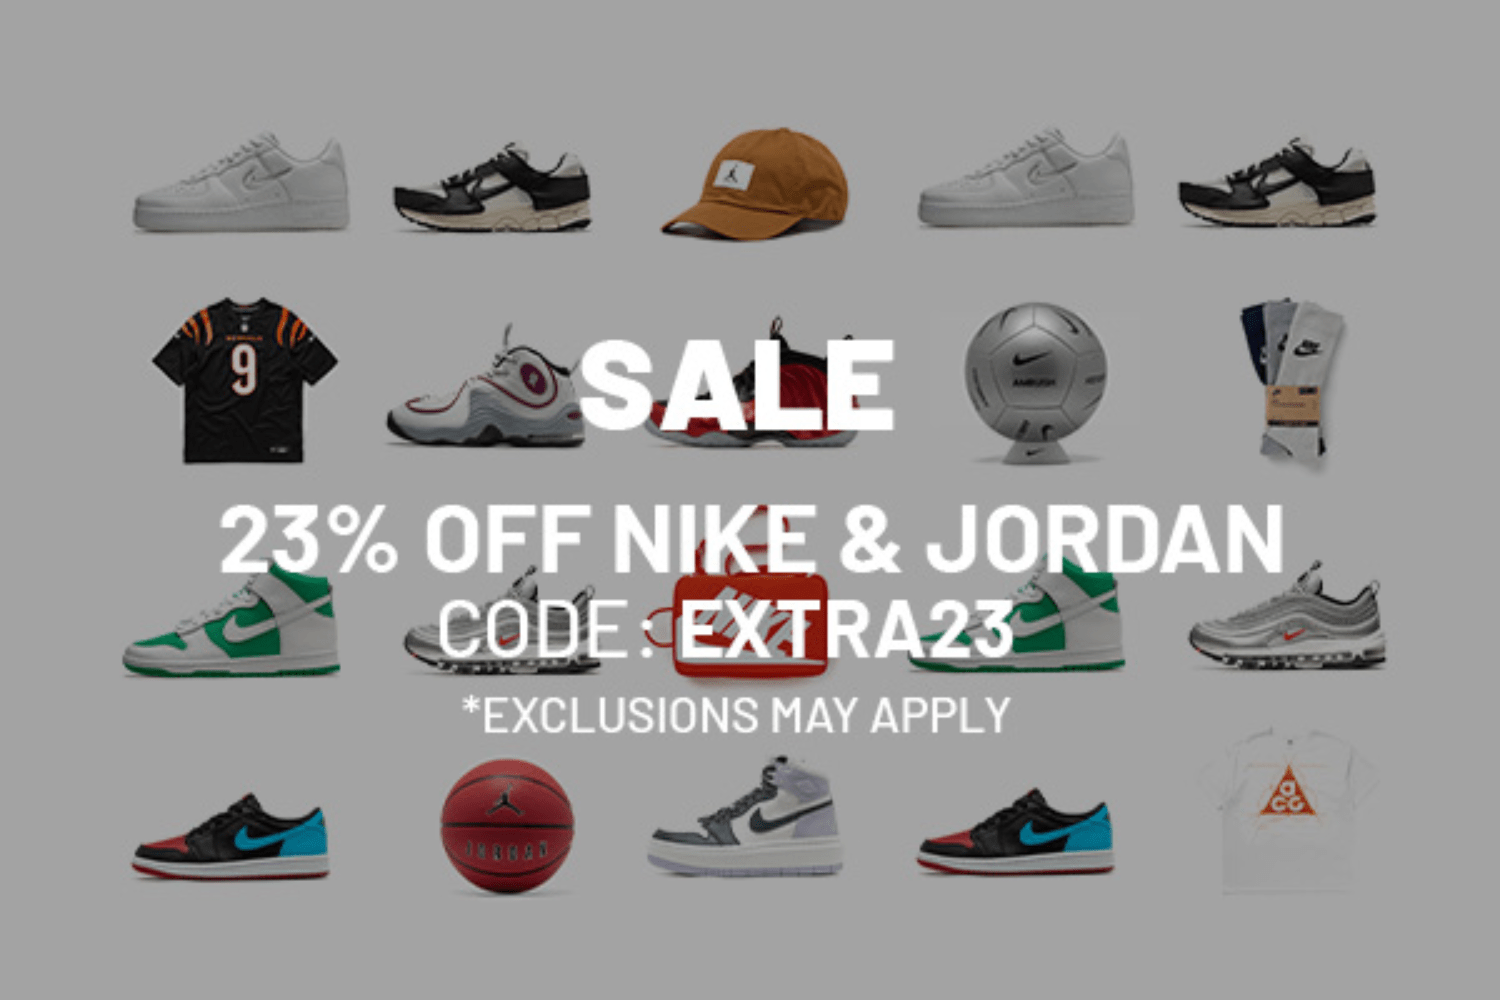 Enjoy 23% off Nike and Jordan items at BSTN